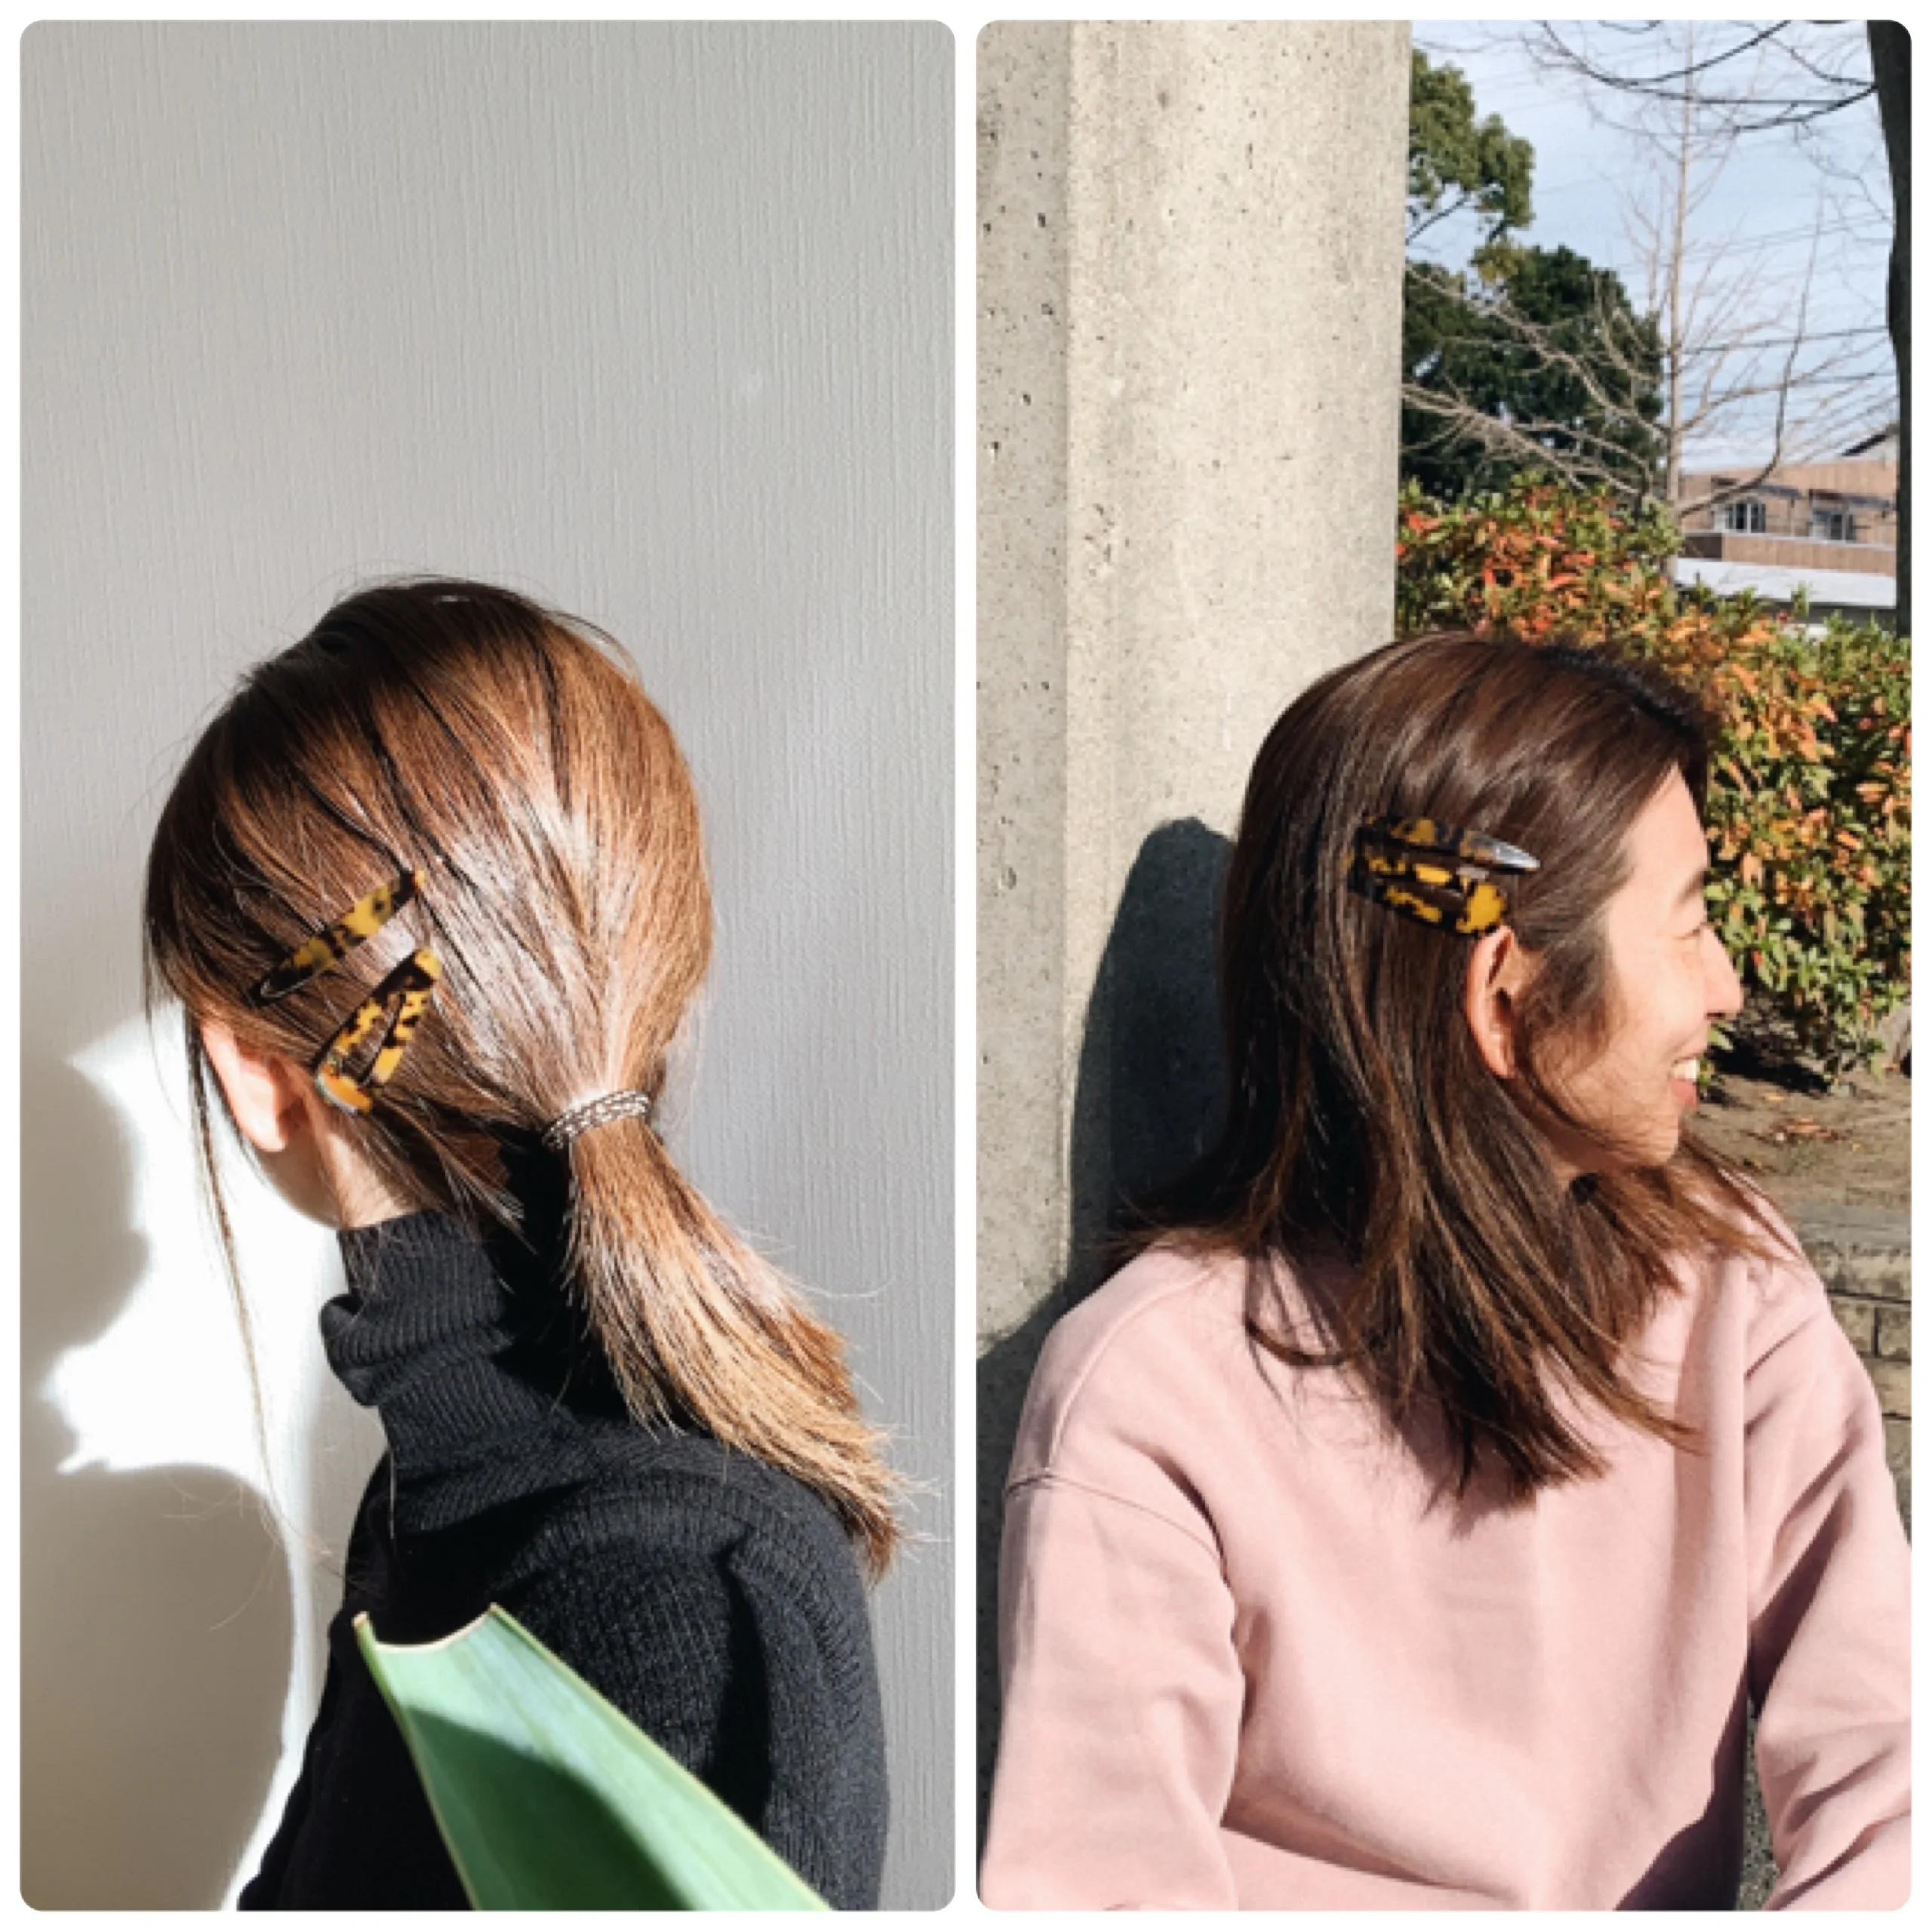 ZARA】ぱっちんピンで不器用でも出来るヘアアレンジ | ファッション誌 